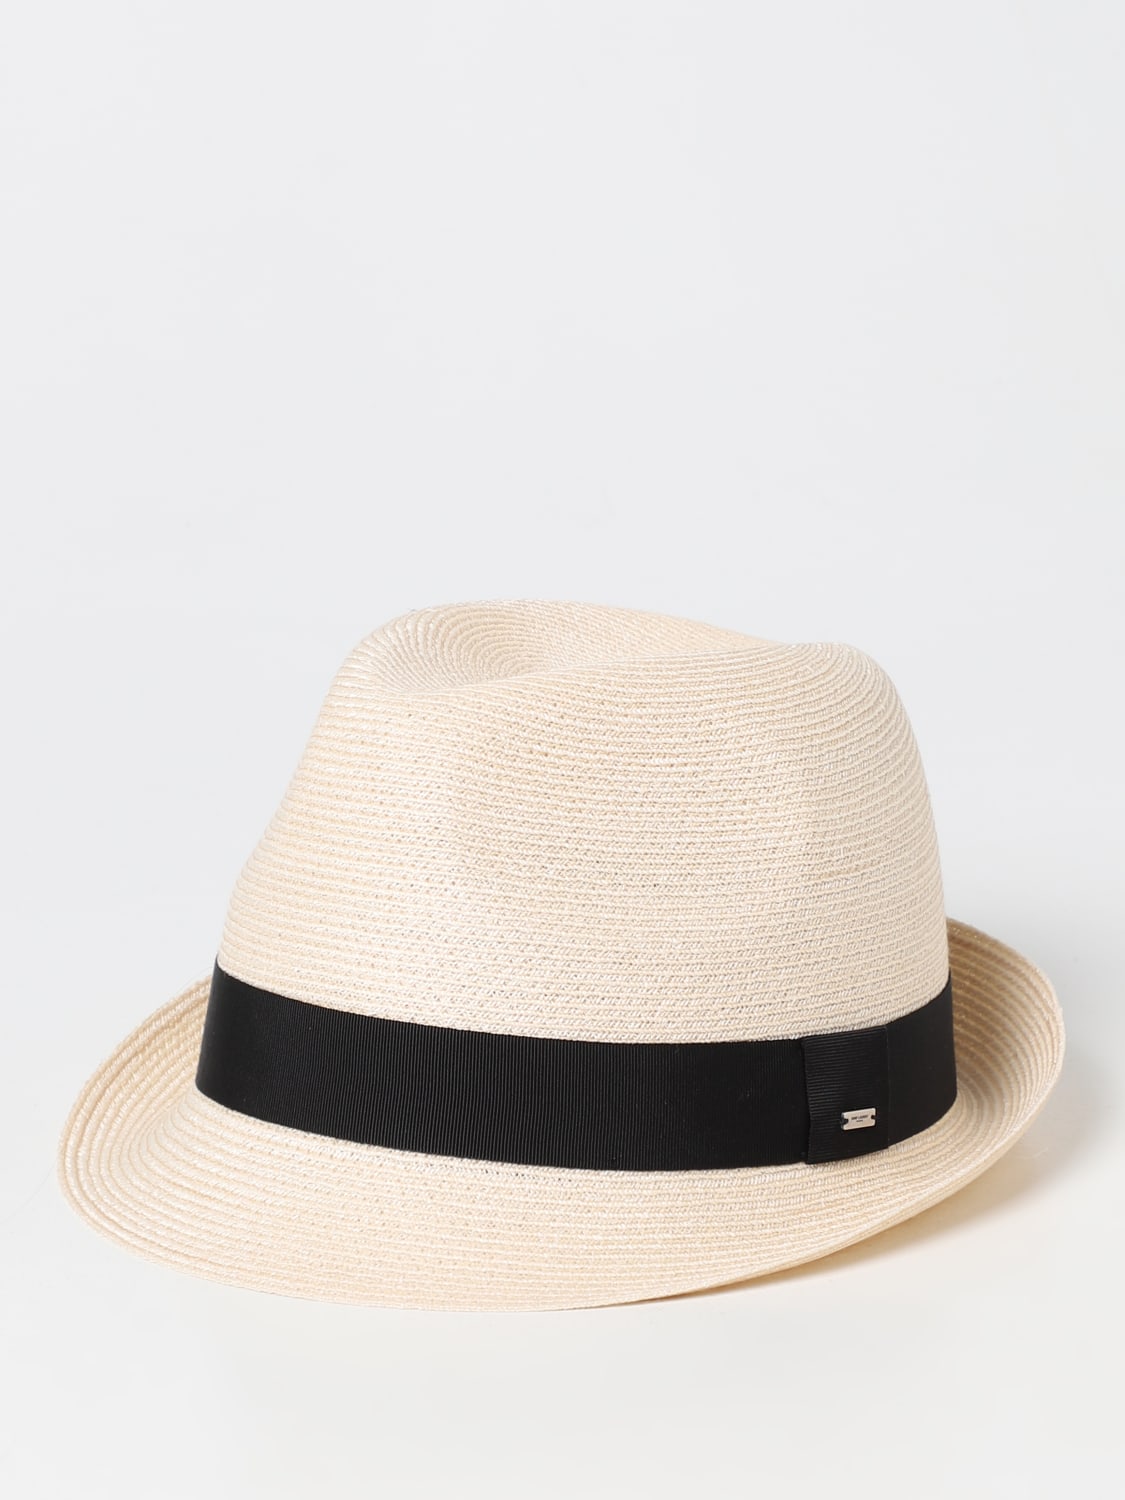 Men's Hats and Caps, Saint Laurent